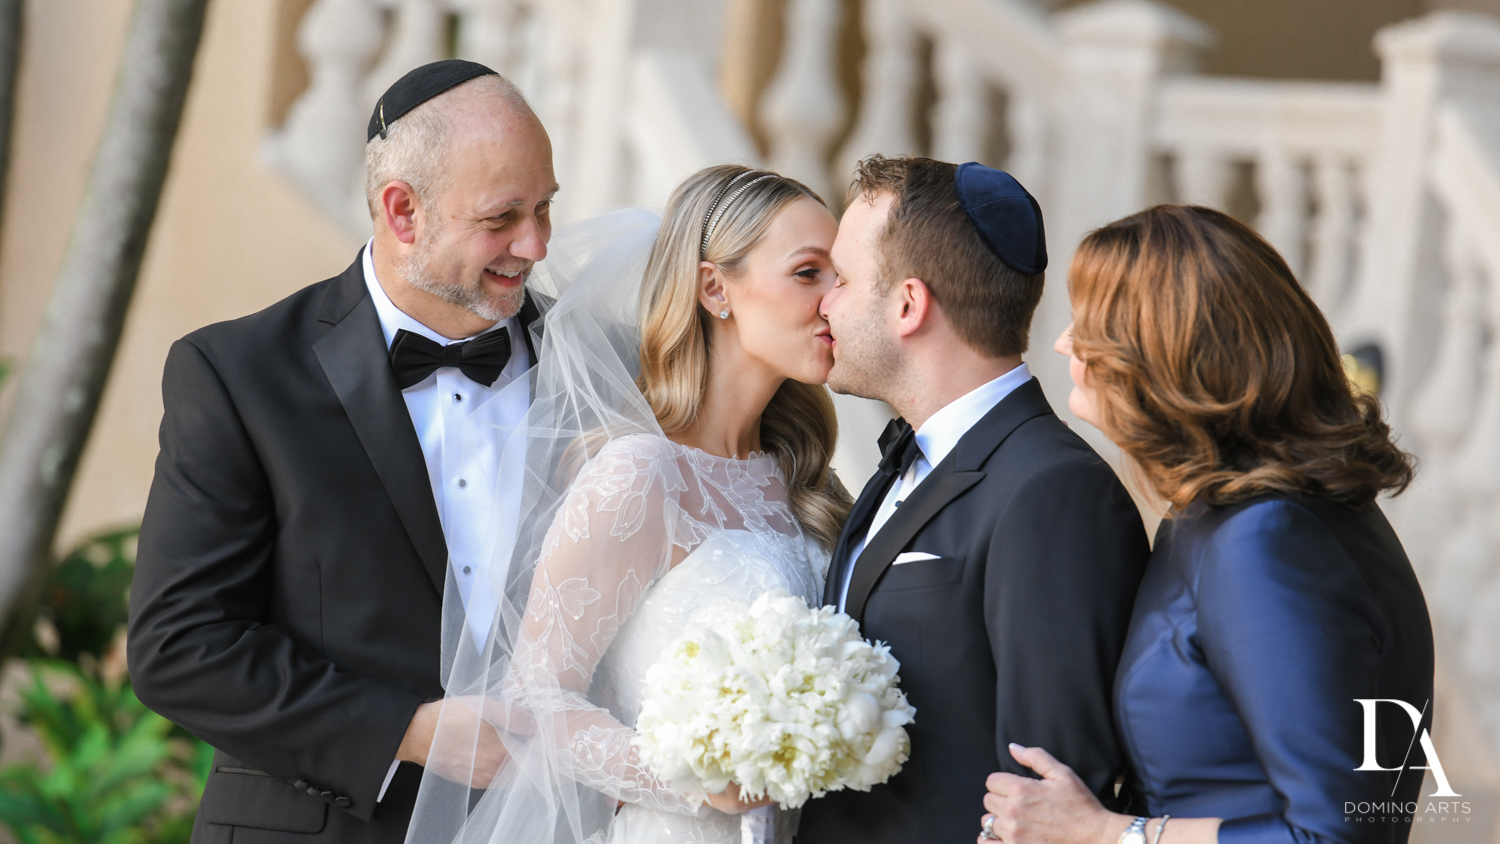 wedding kiss at Lavish Flowers & Crystals Wedding at Aventura Turnberry Jewish Center by Domino Arts Photography